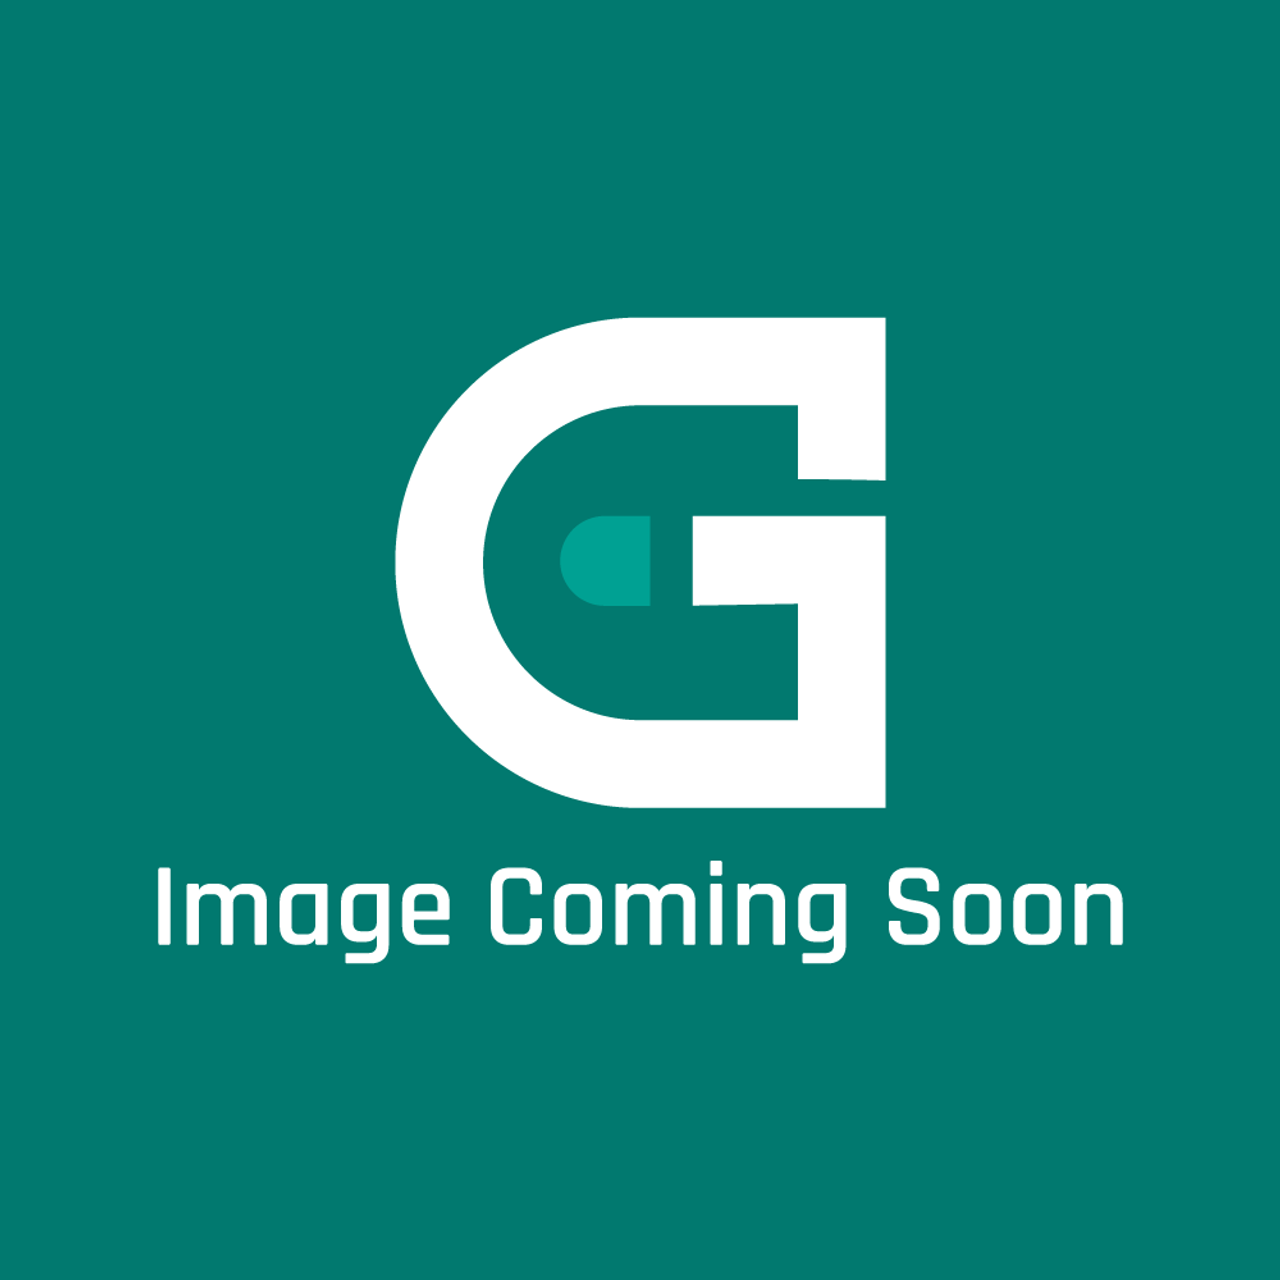 LG 181-091G - Capacitor,Ceramic,Radial - Image Coming Soon!